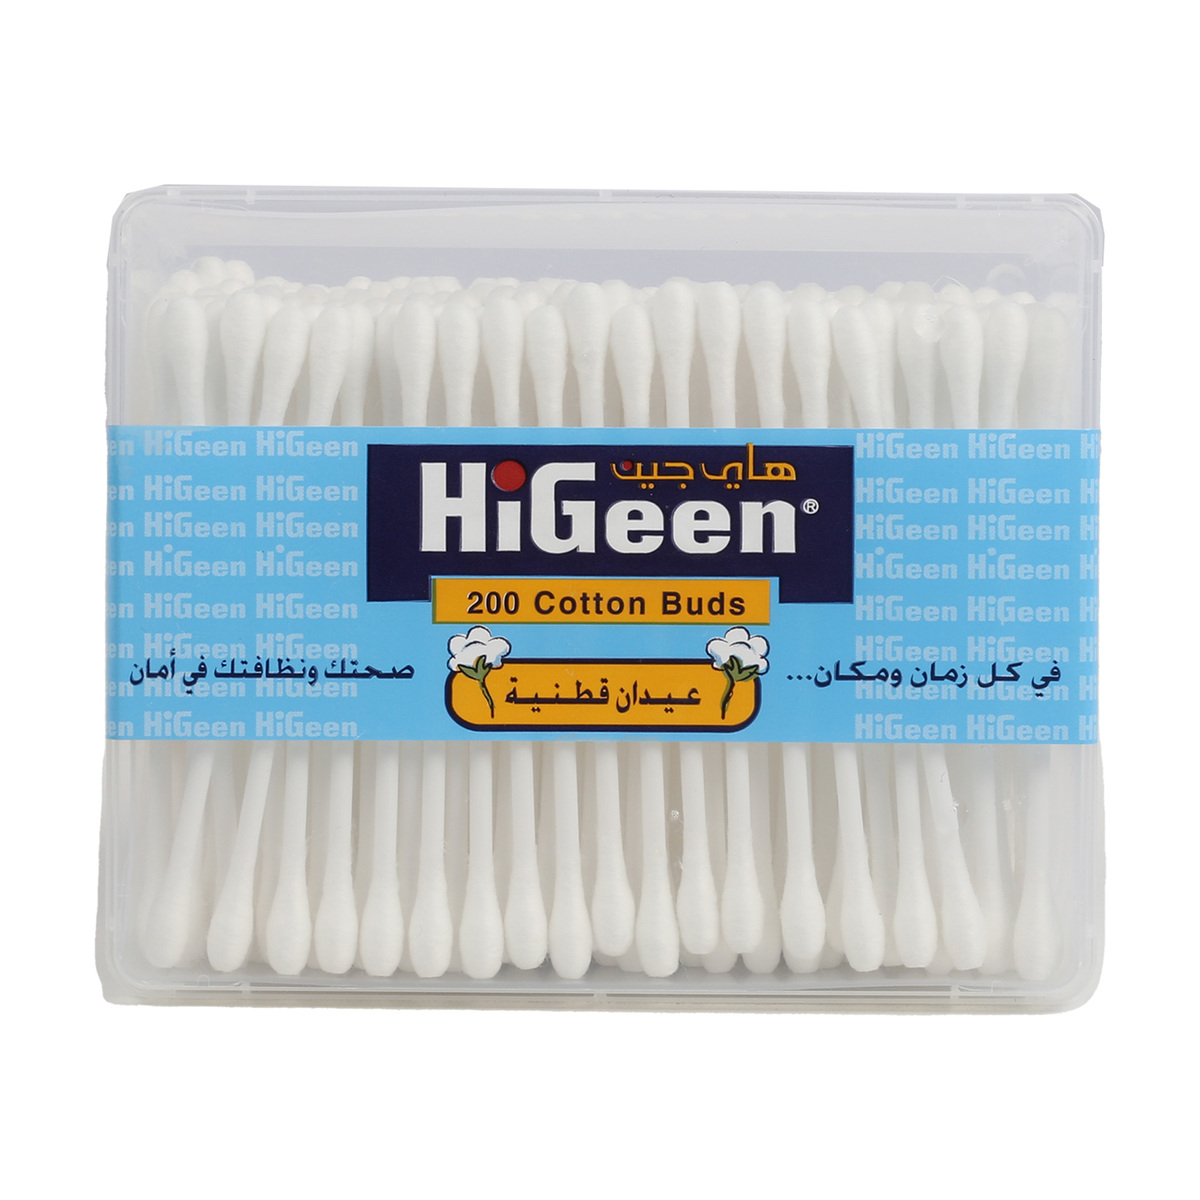 Hi-Geen Square Box Cotton Buds 200 pcs